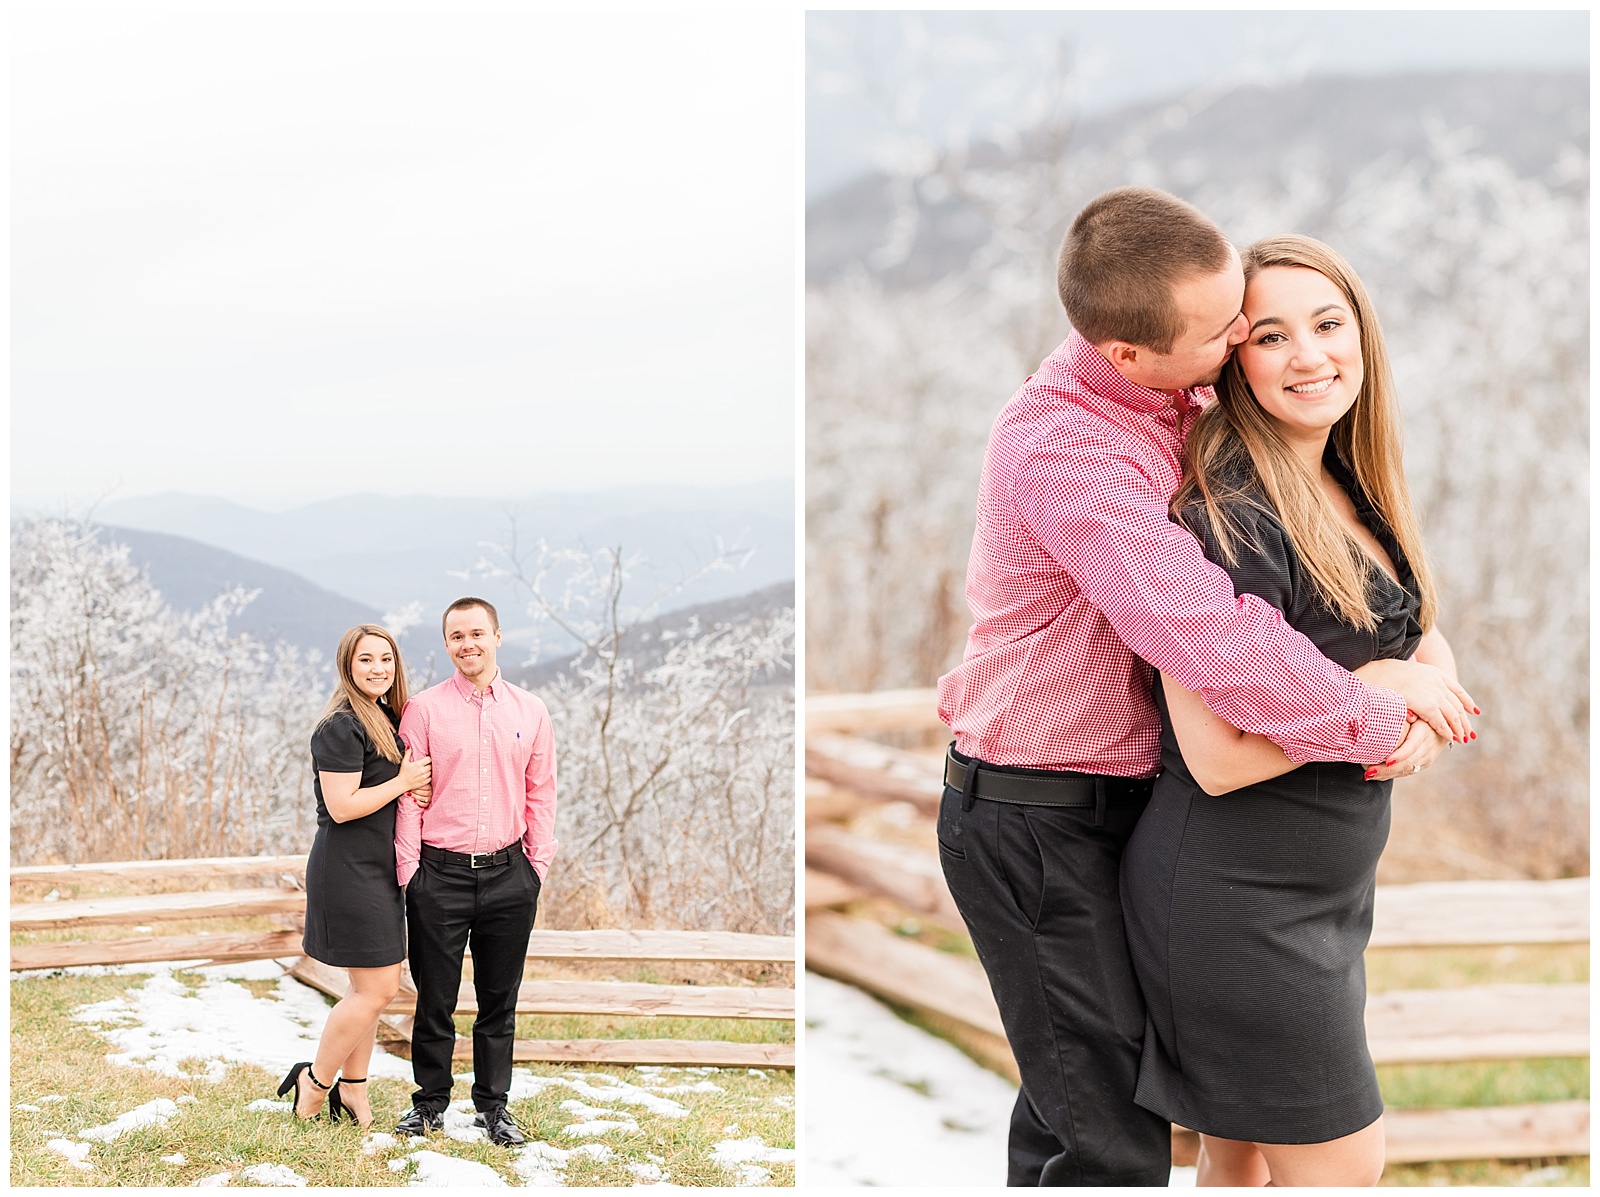 A Snowy Wintergreen Proposal | Sean and Lindsey | Virginia Wedding Photographer25.jpg